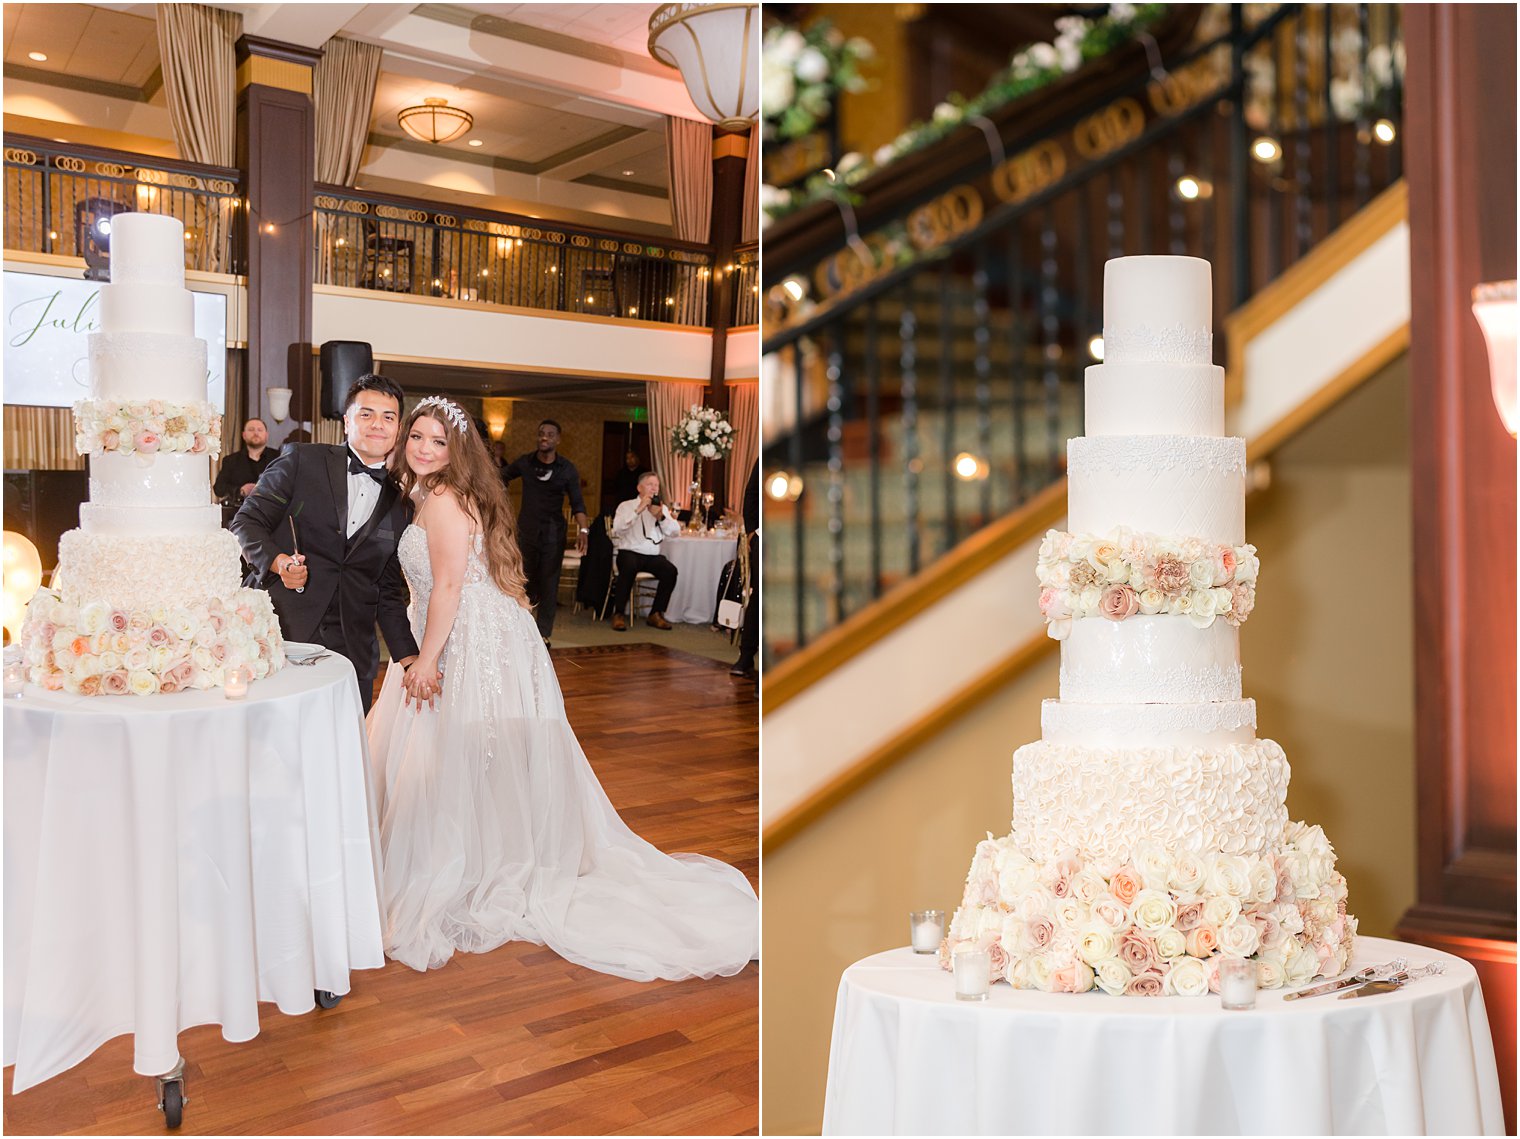 newlyweds cut wedding cake at Collingswood Grand Ballroom